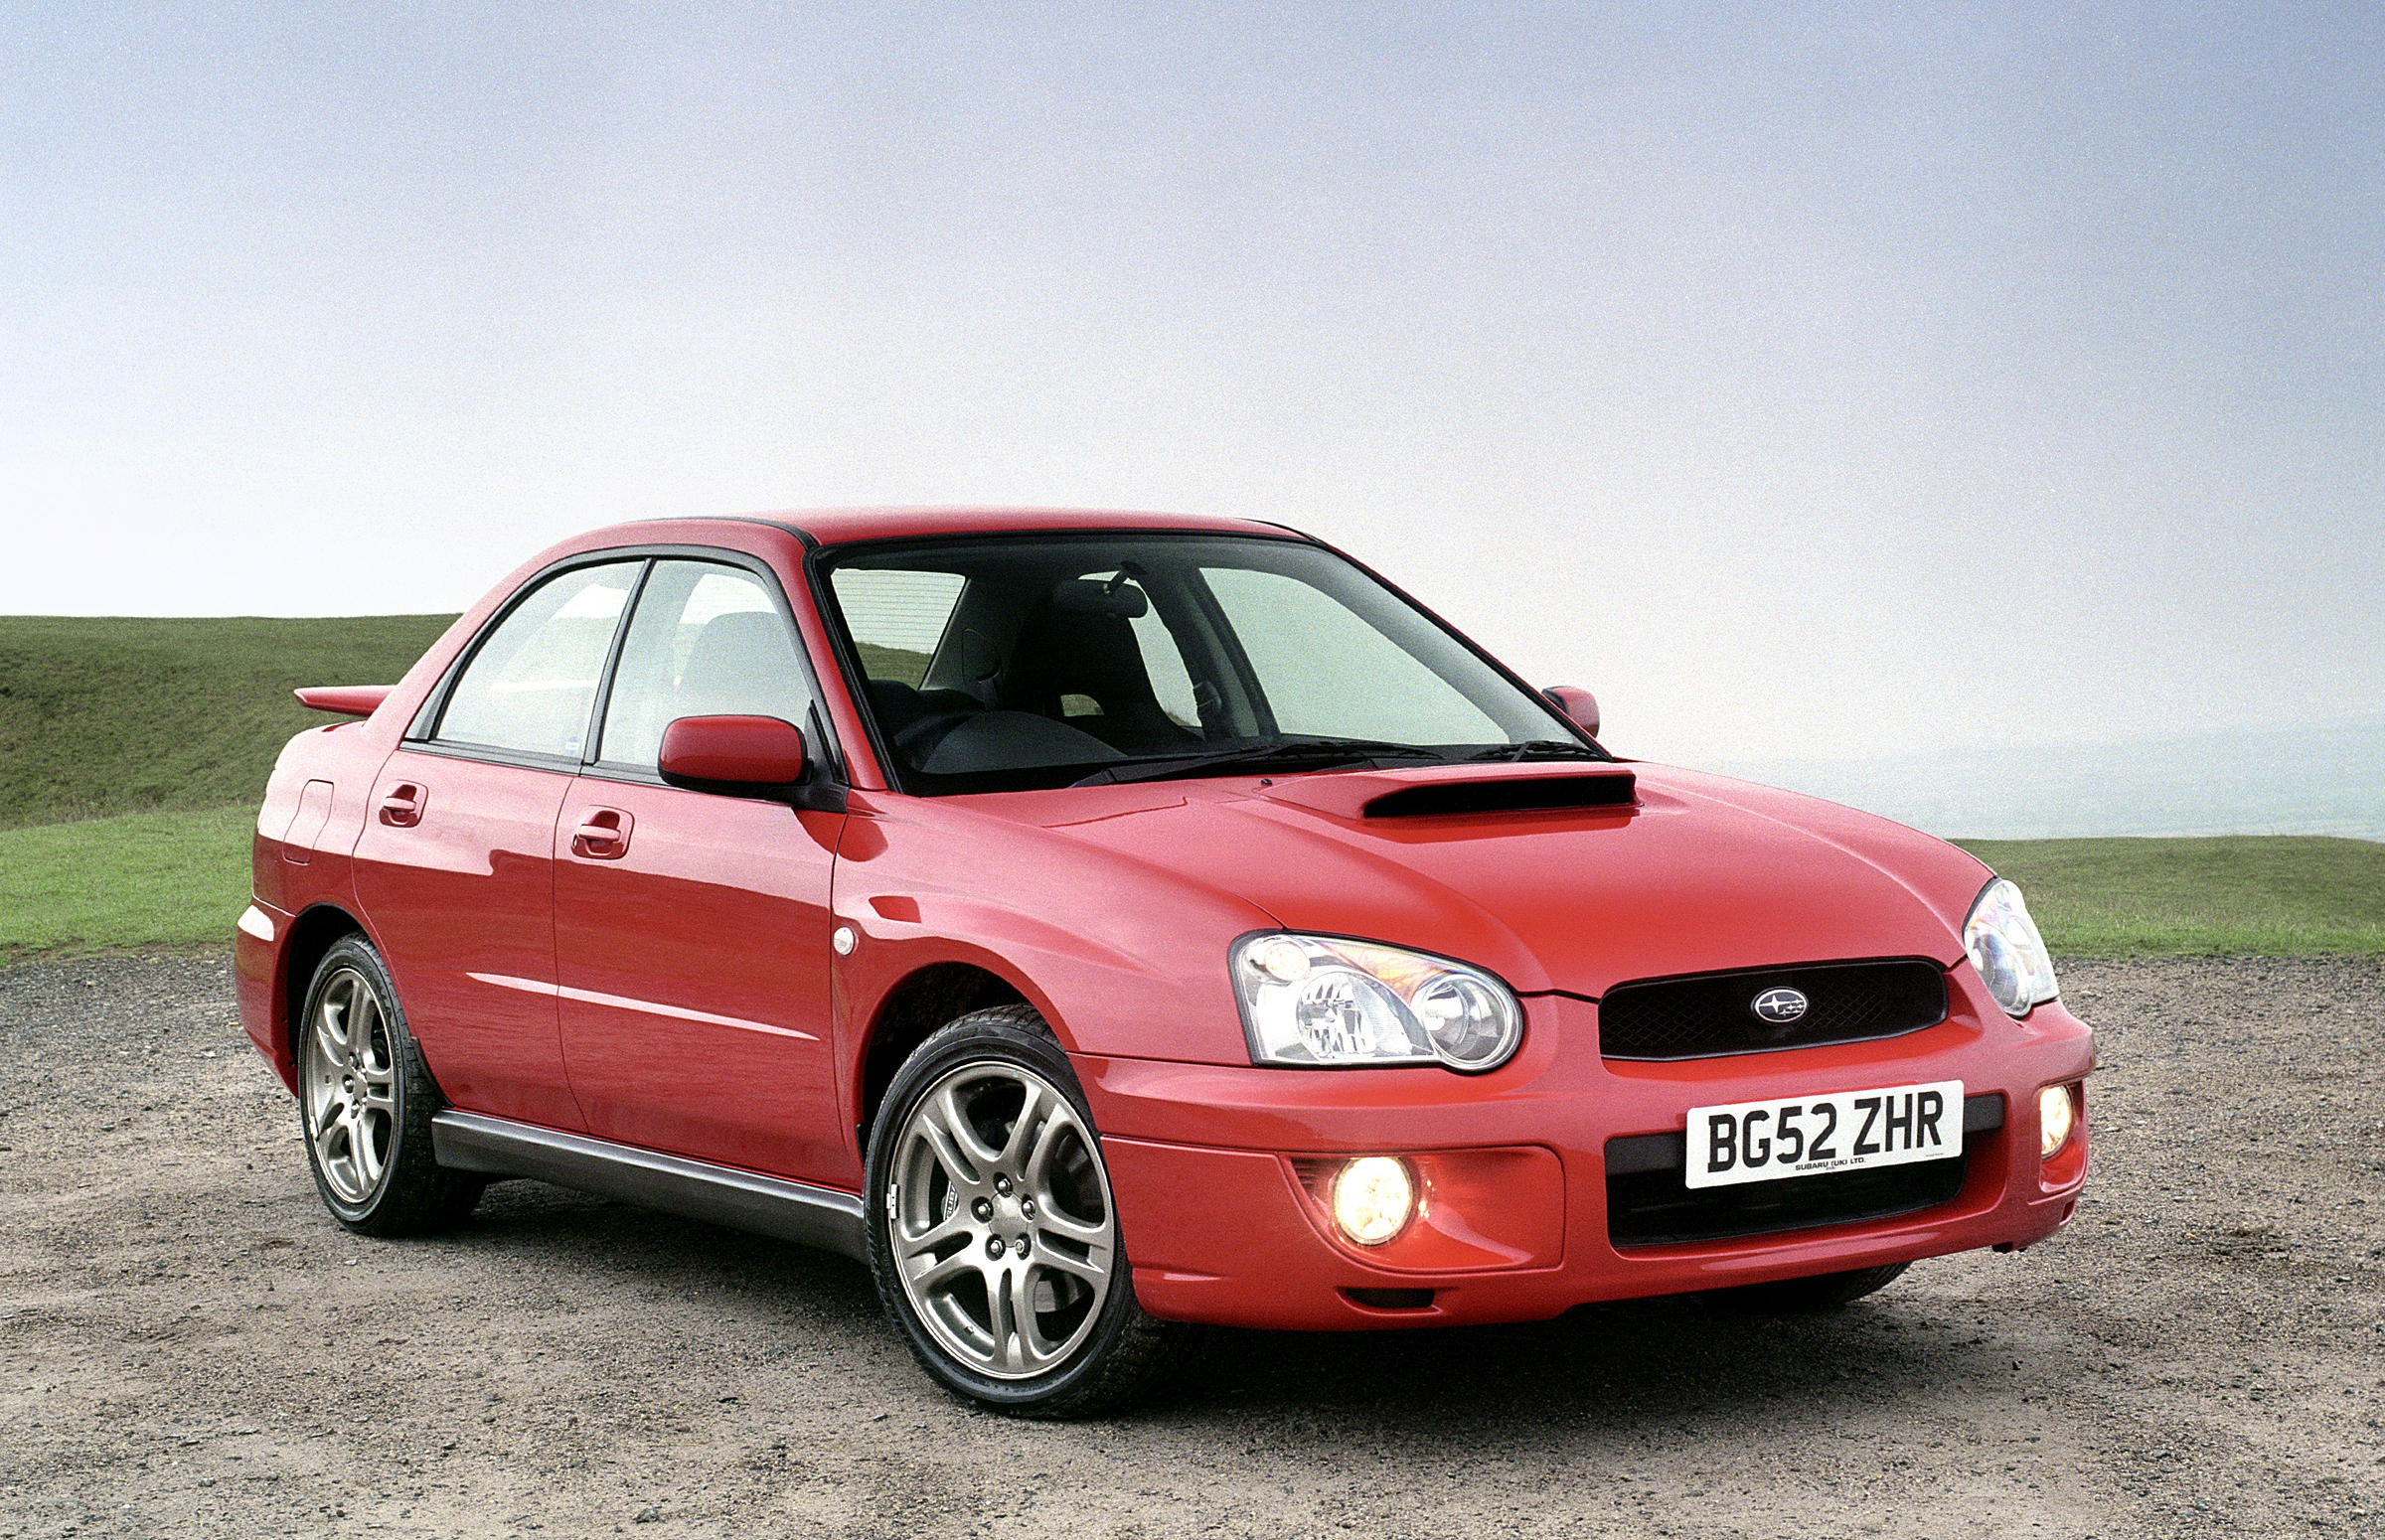 Buying guide: fantastically fun £6000 used cars, including the Subaru Impreza WRX